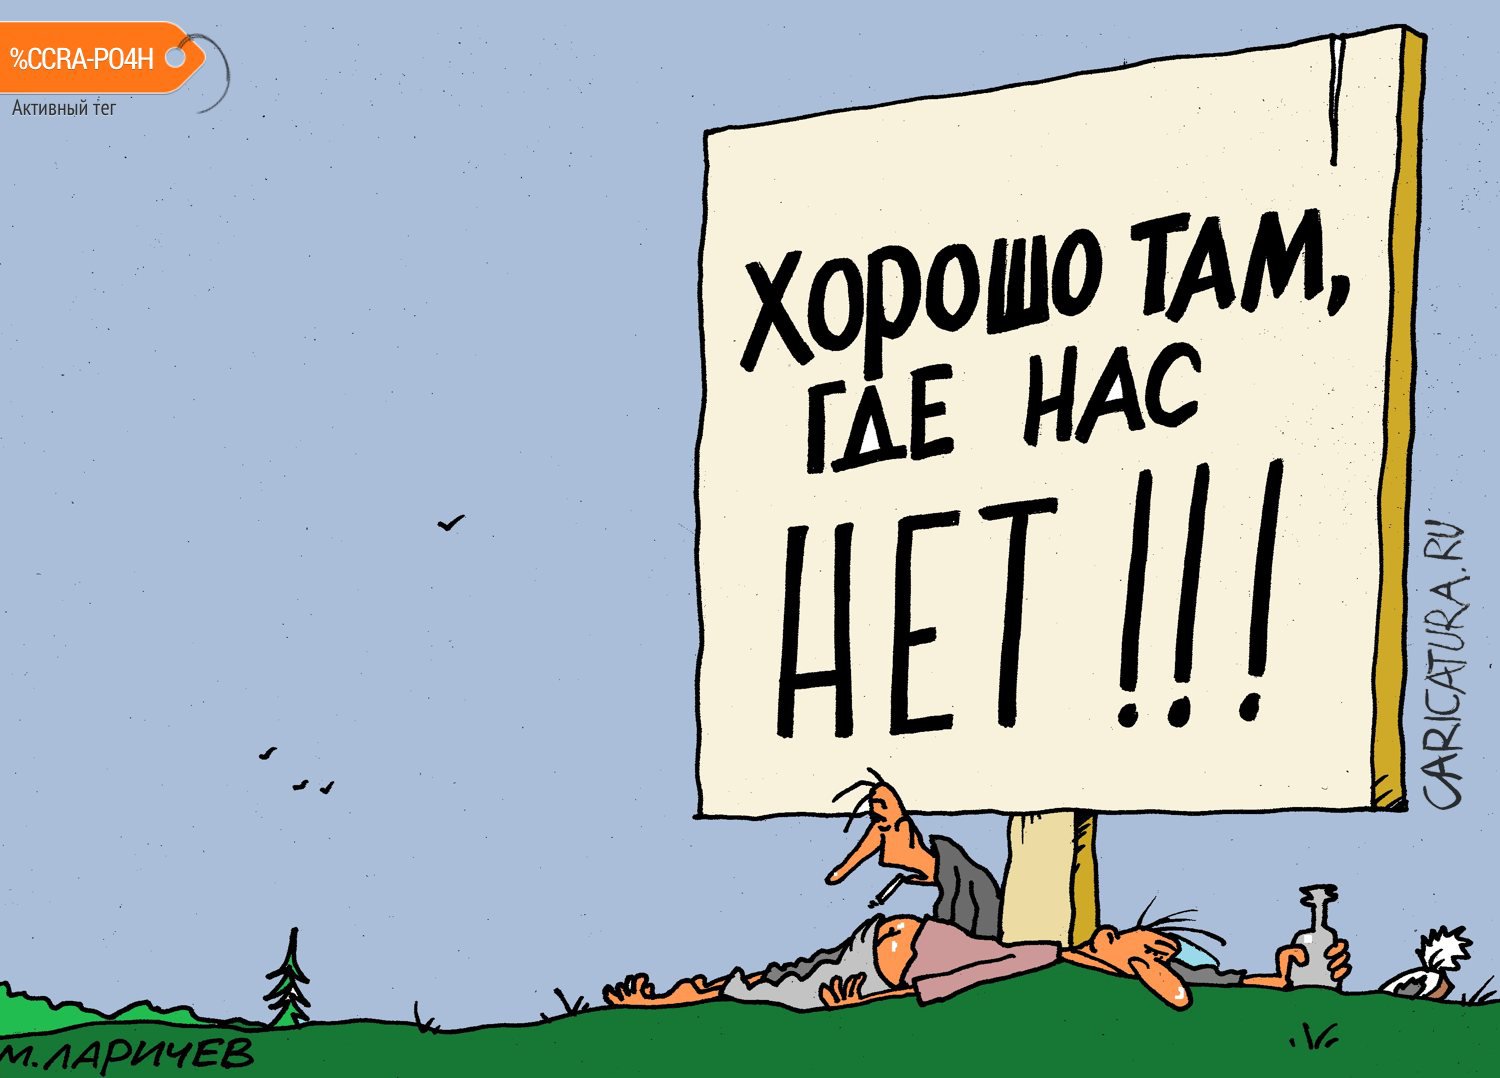 Карикатура "Точно так", Михаил Ларичев